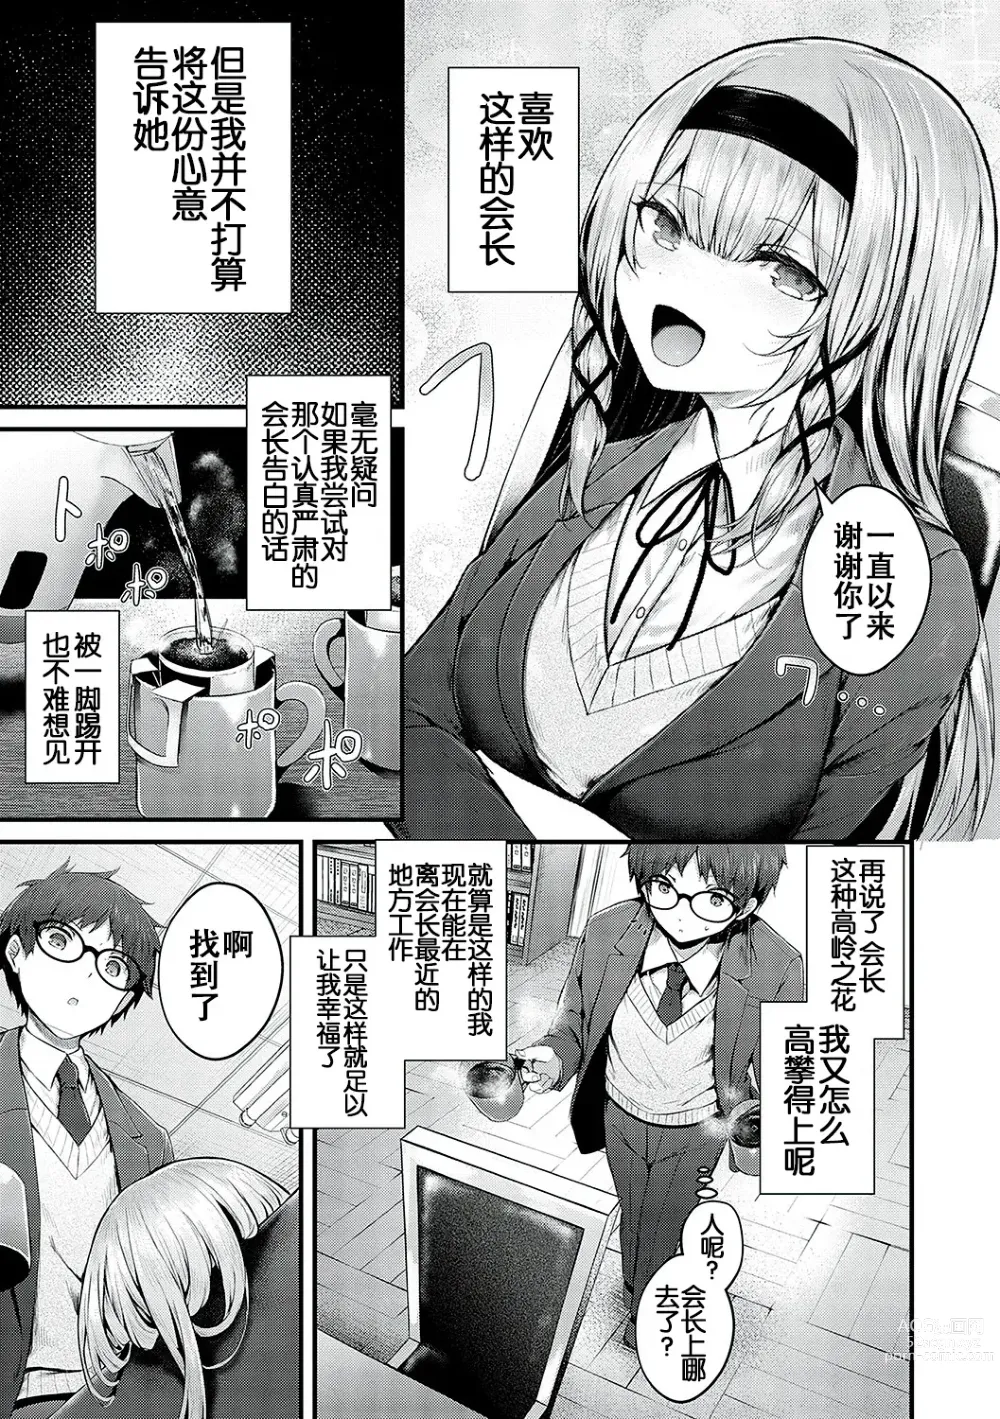 Page 6 of manga Namaiki Love Hole